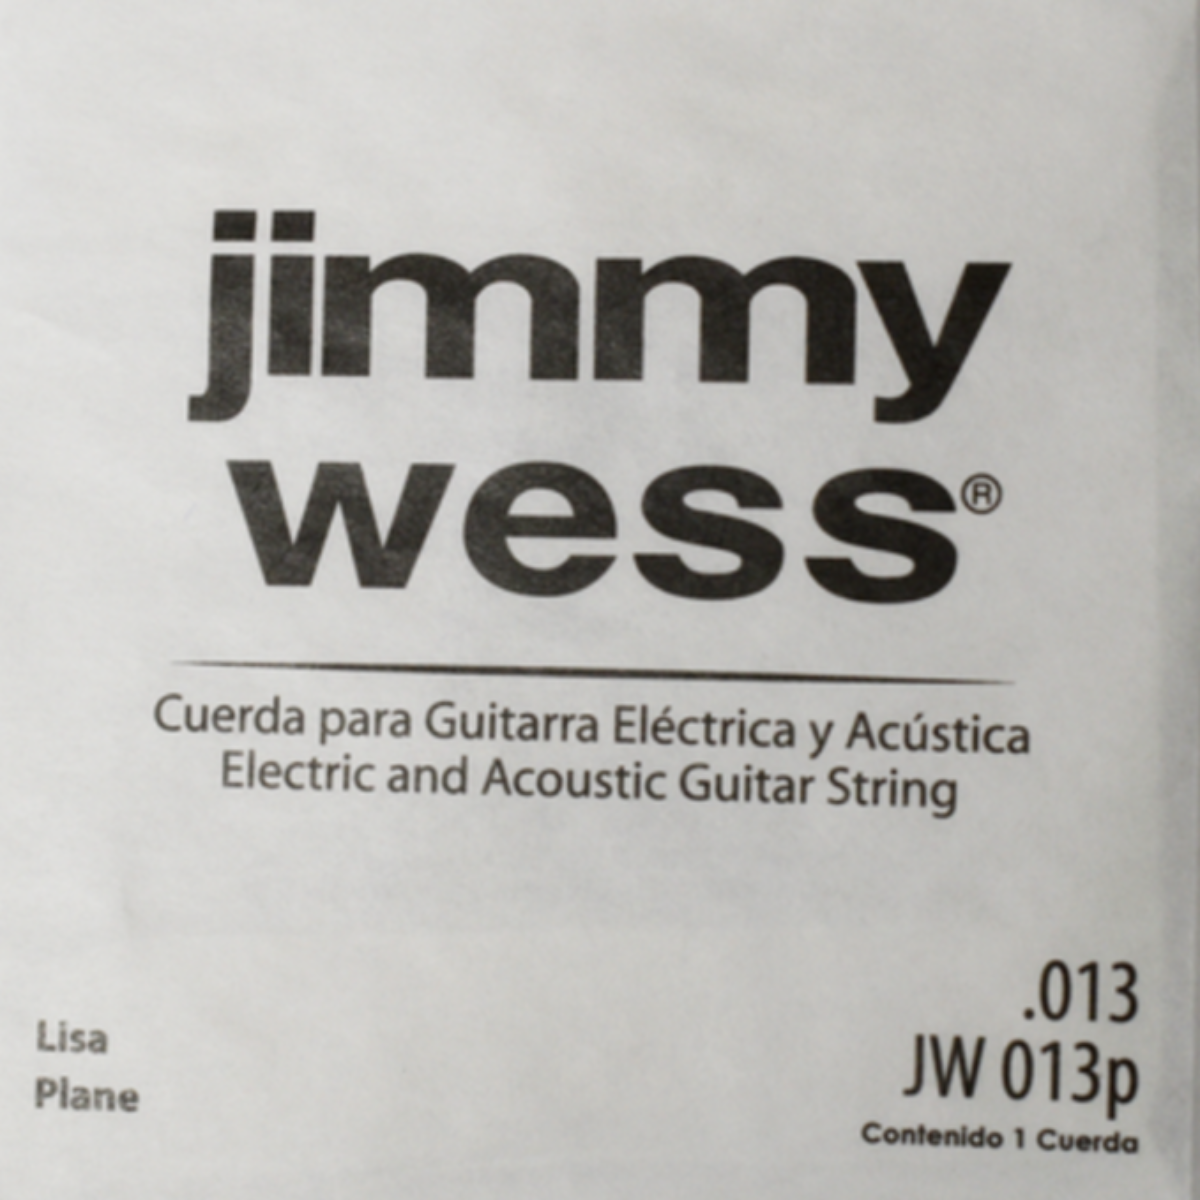 CUERDA P/GUITARRA ELECTRICA/ACUSTICA JIMMYWESS LISA (013)